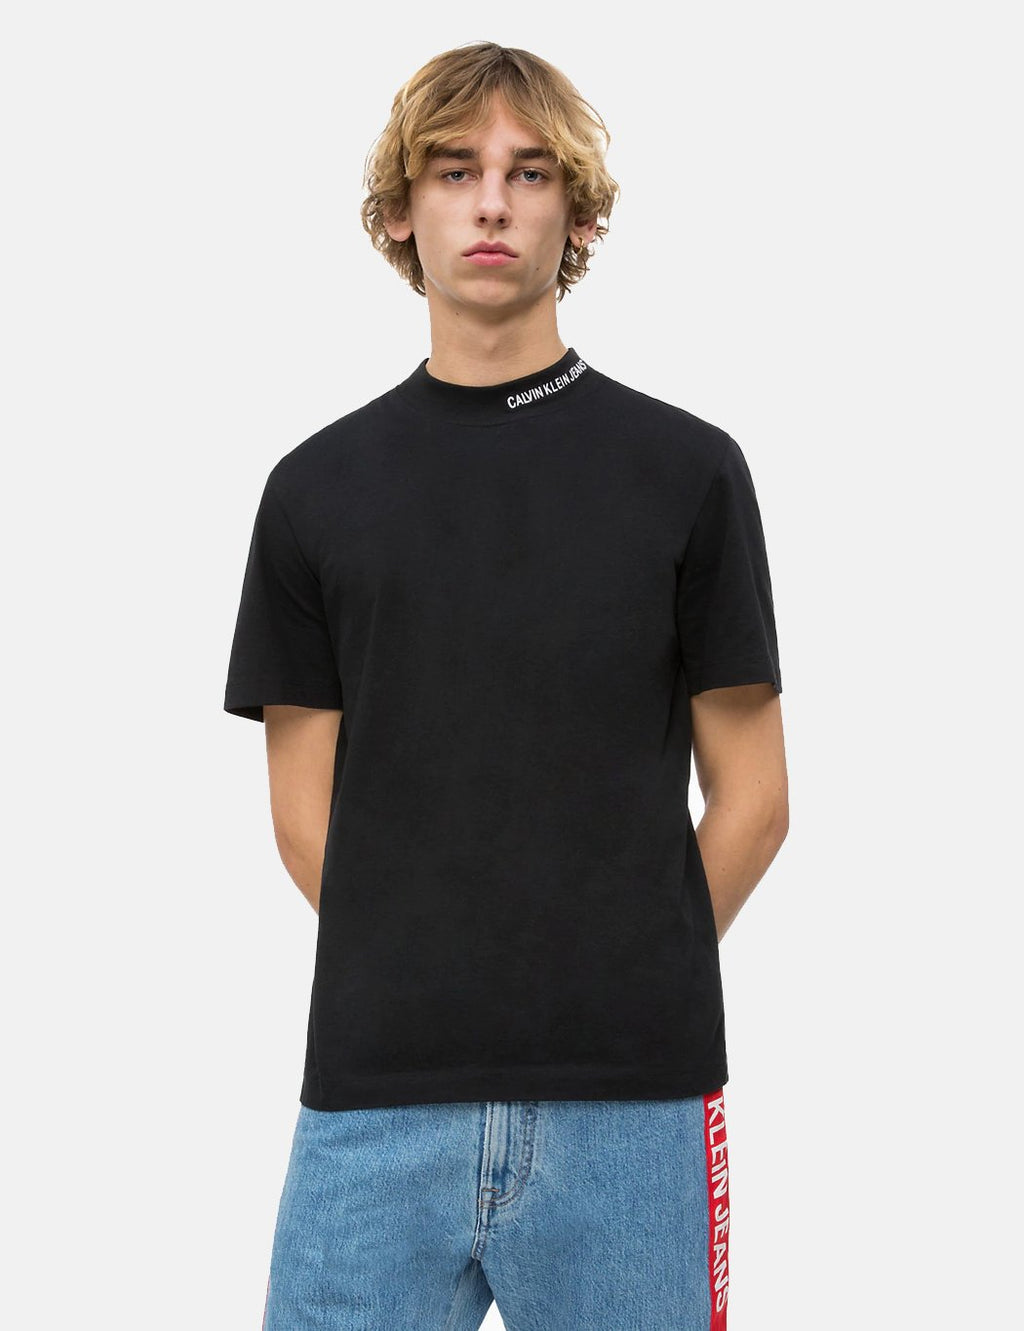 Calvin – EXCESS. Klein T-Shirt USA Black Crew URBAN Neck EXCESS - URBAN | Embroidered